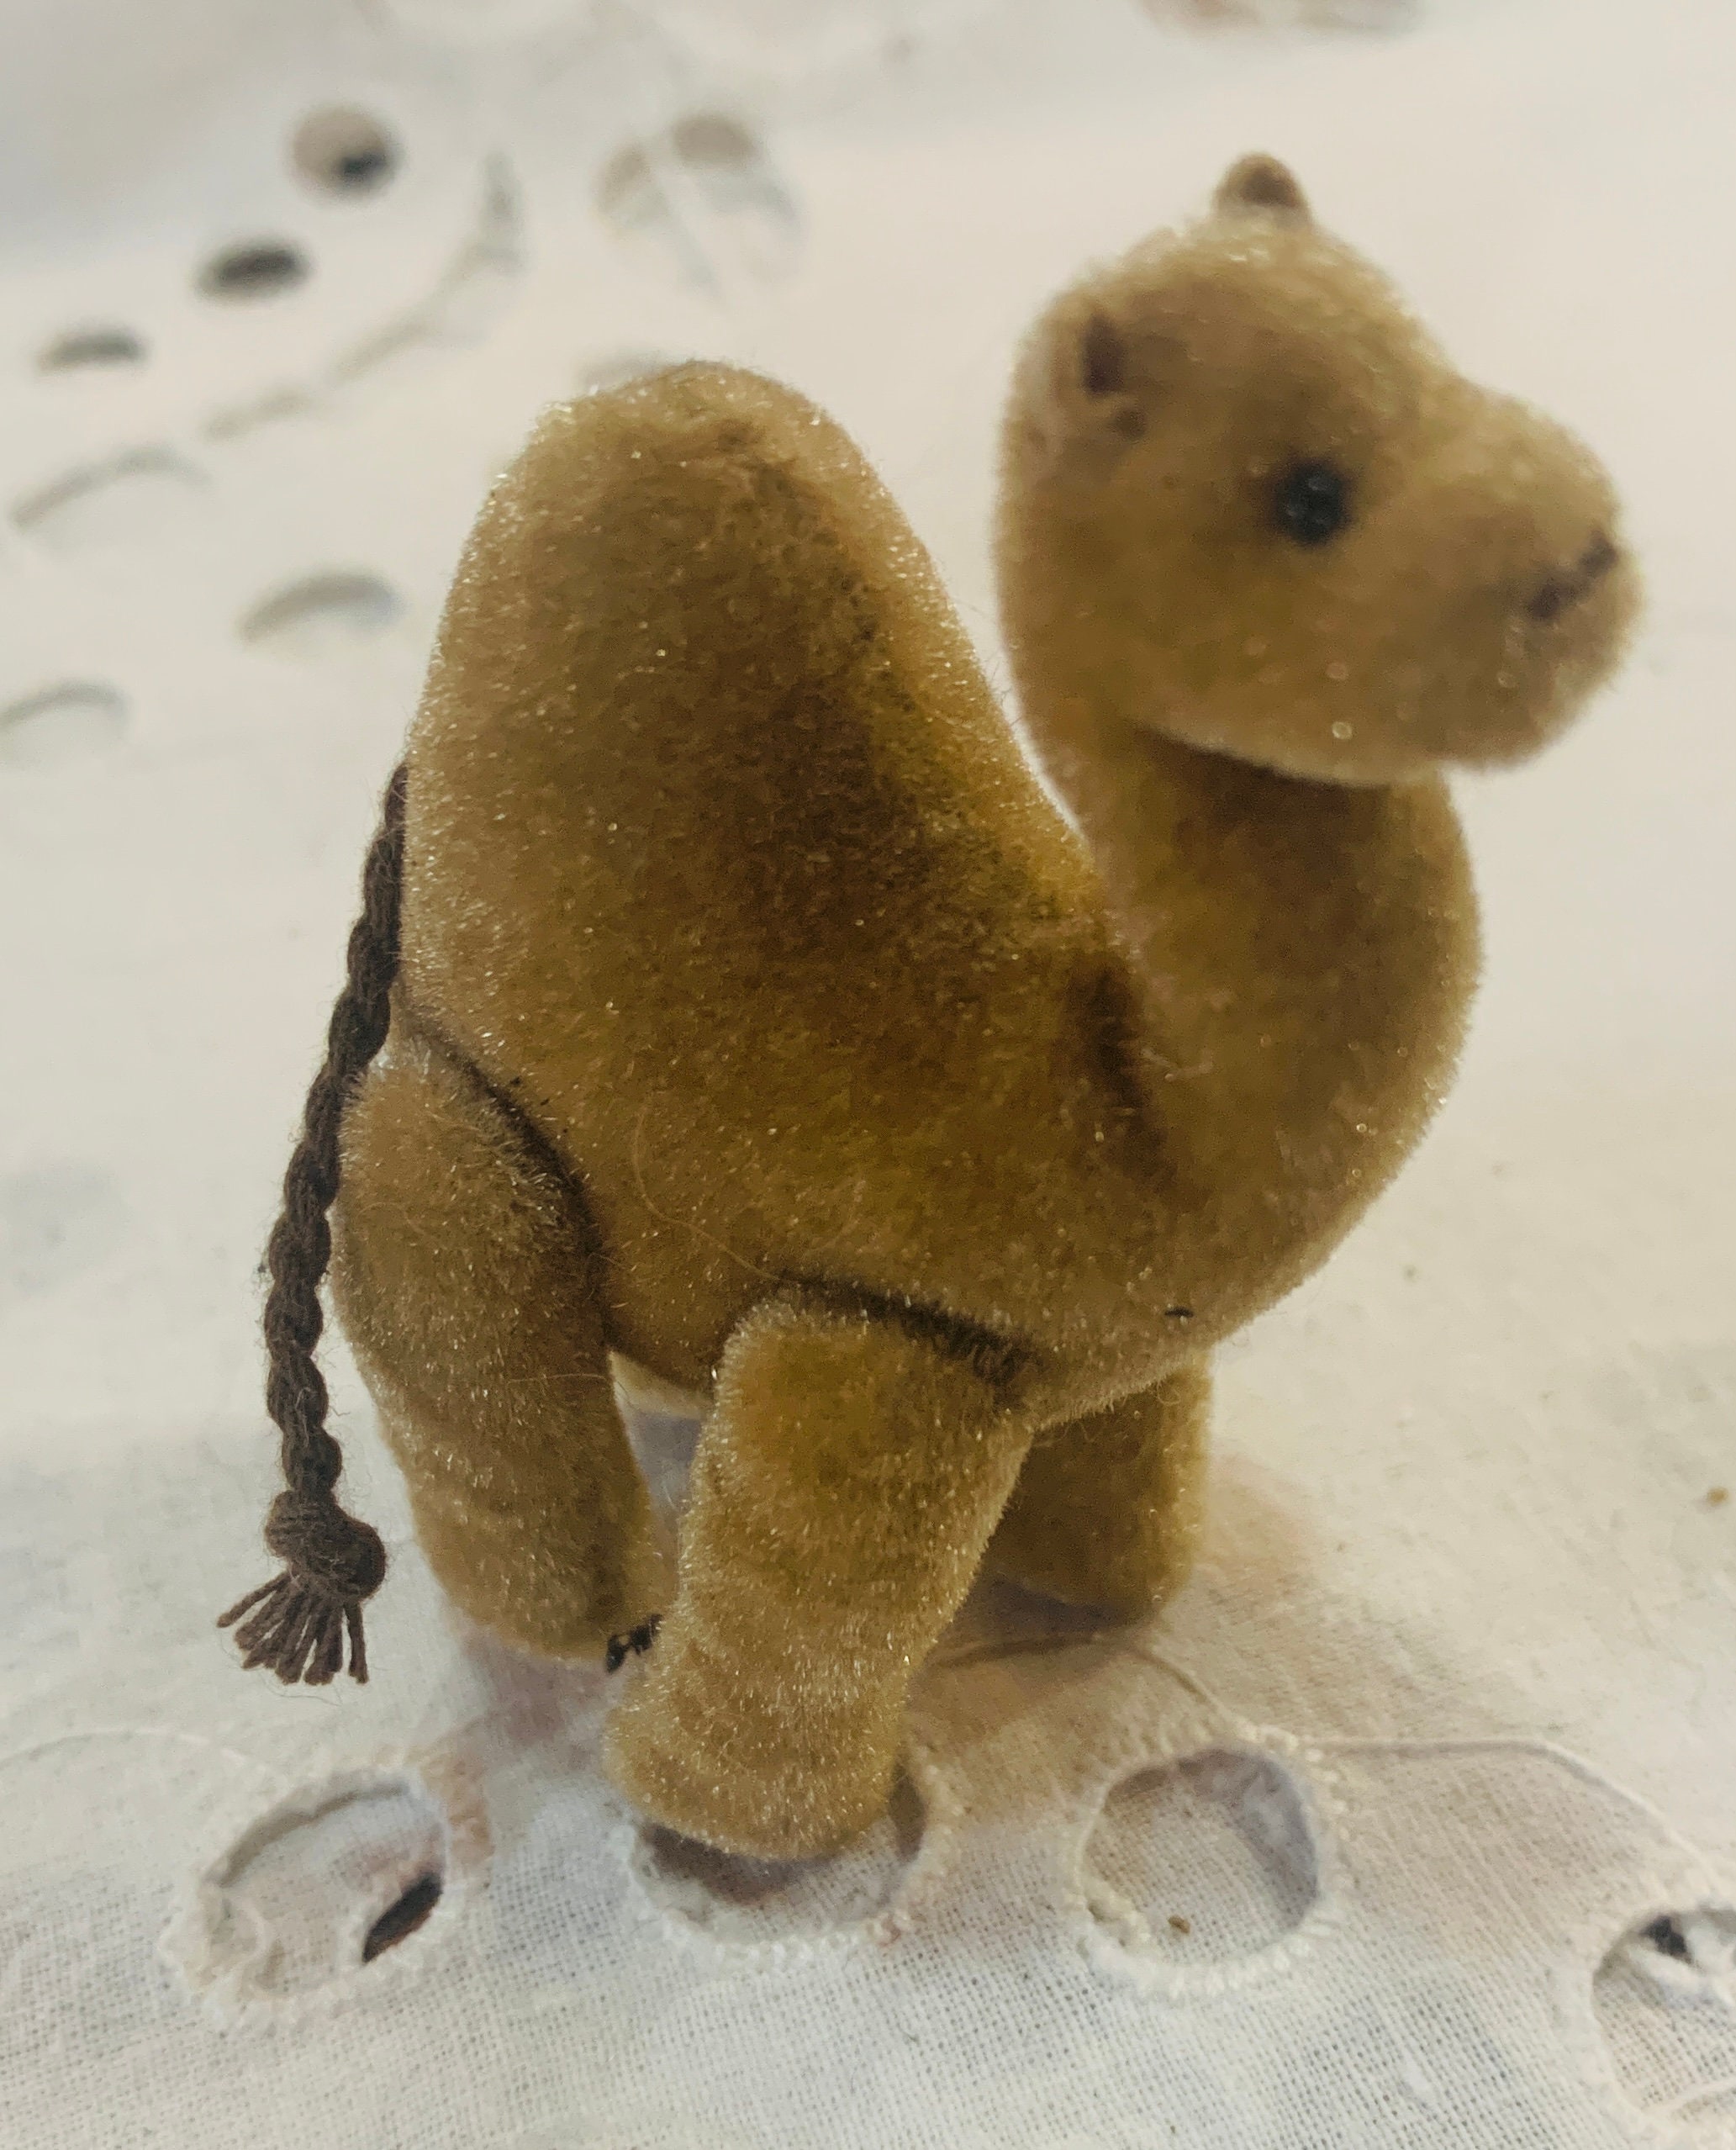 The Camel Crochet Animal Handmade Amigurumi Stuffed Toy Doll High